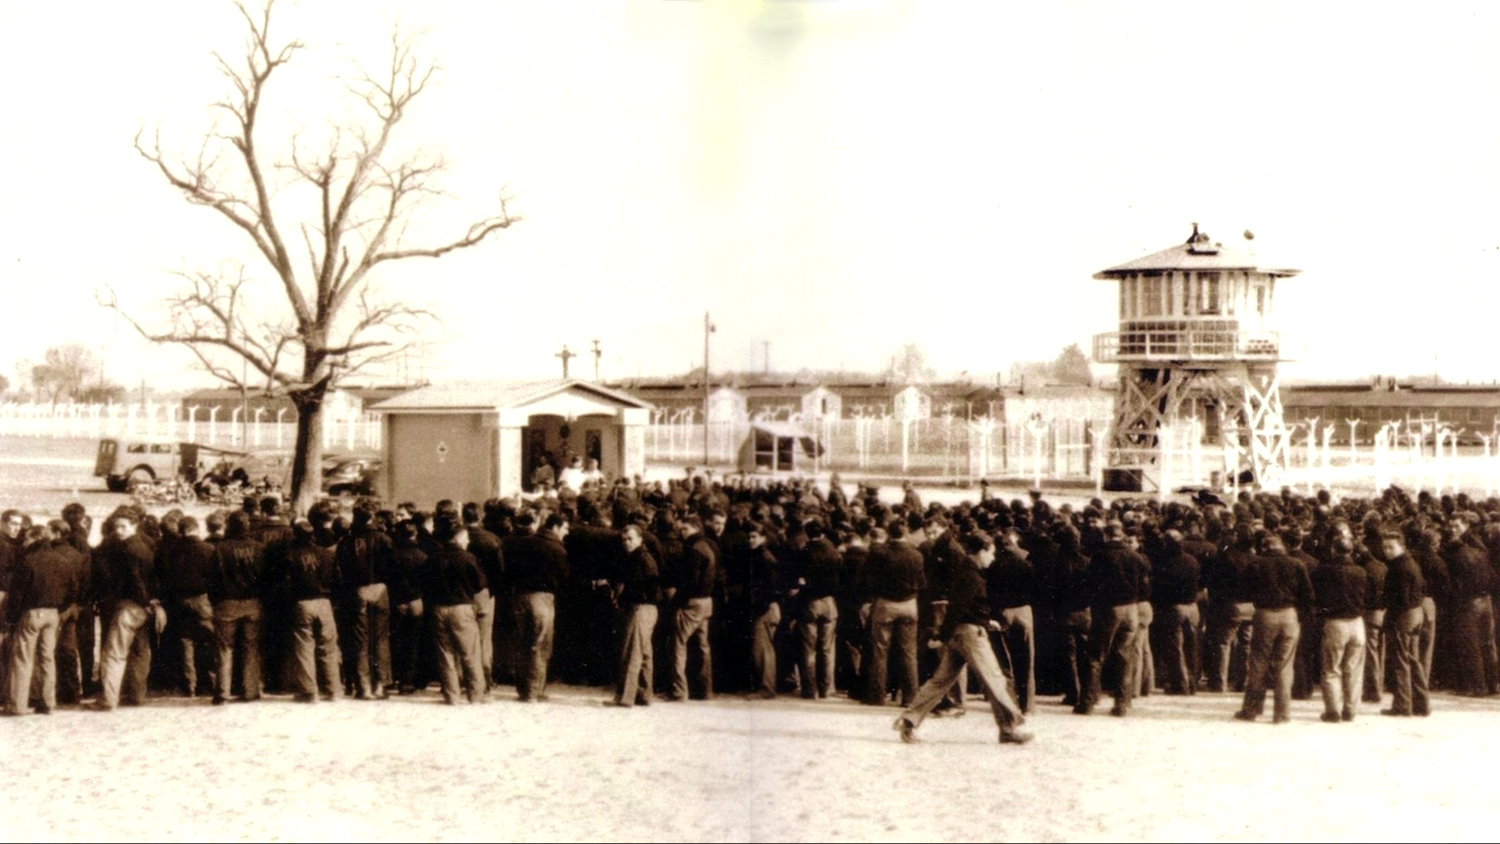 Camp Atterbury POWs